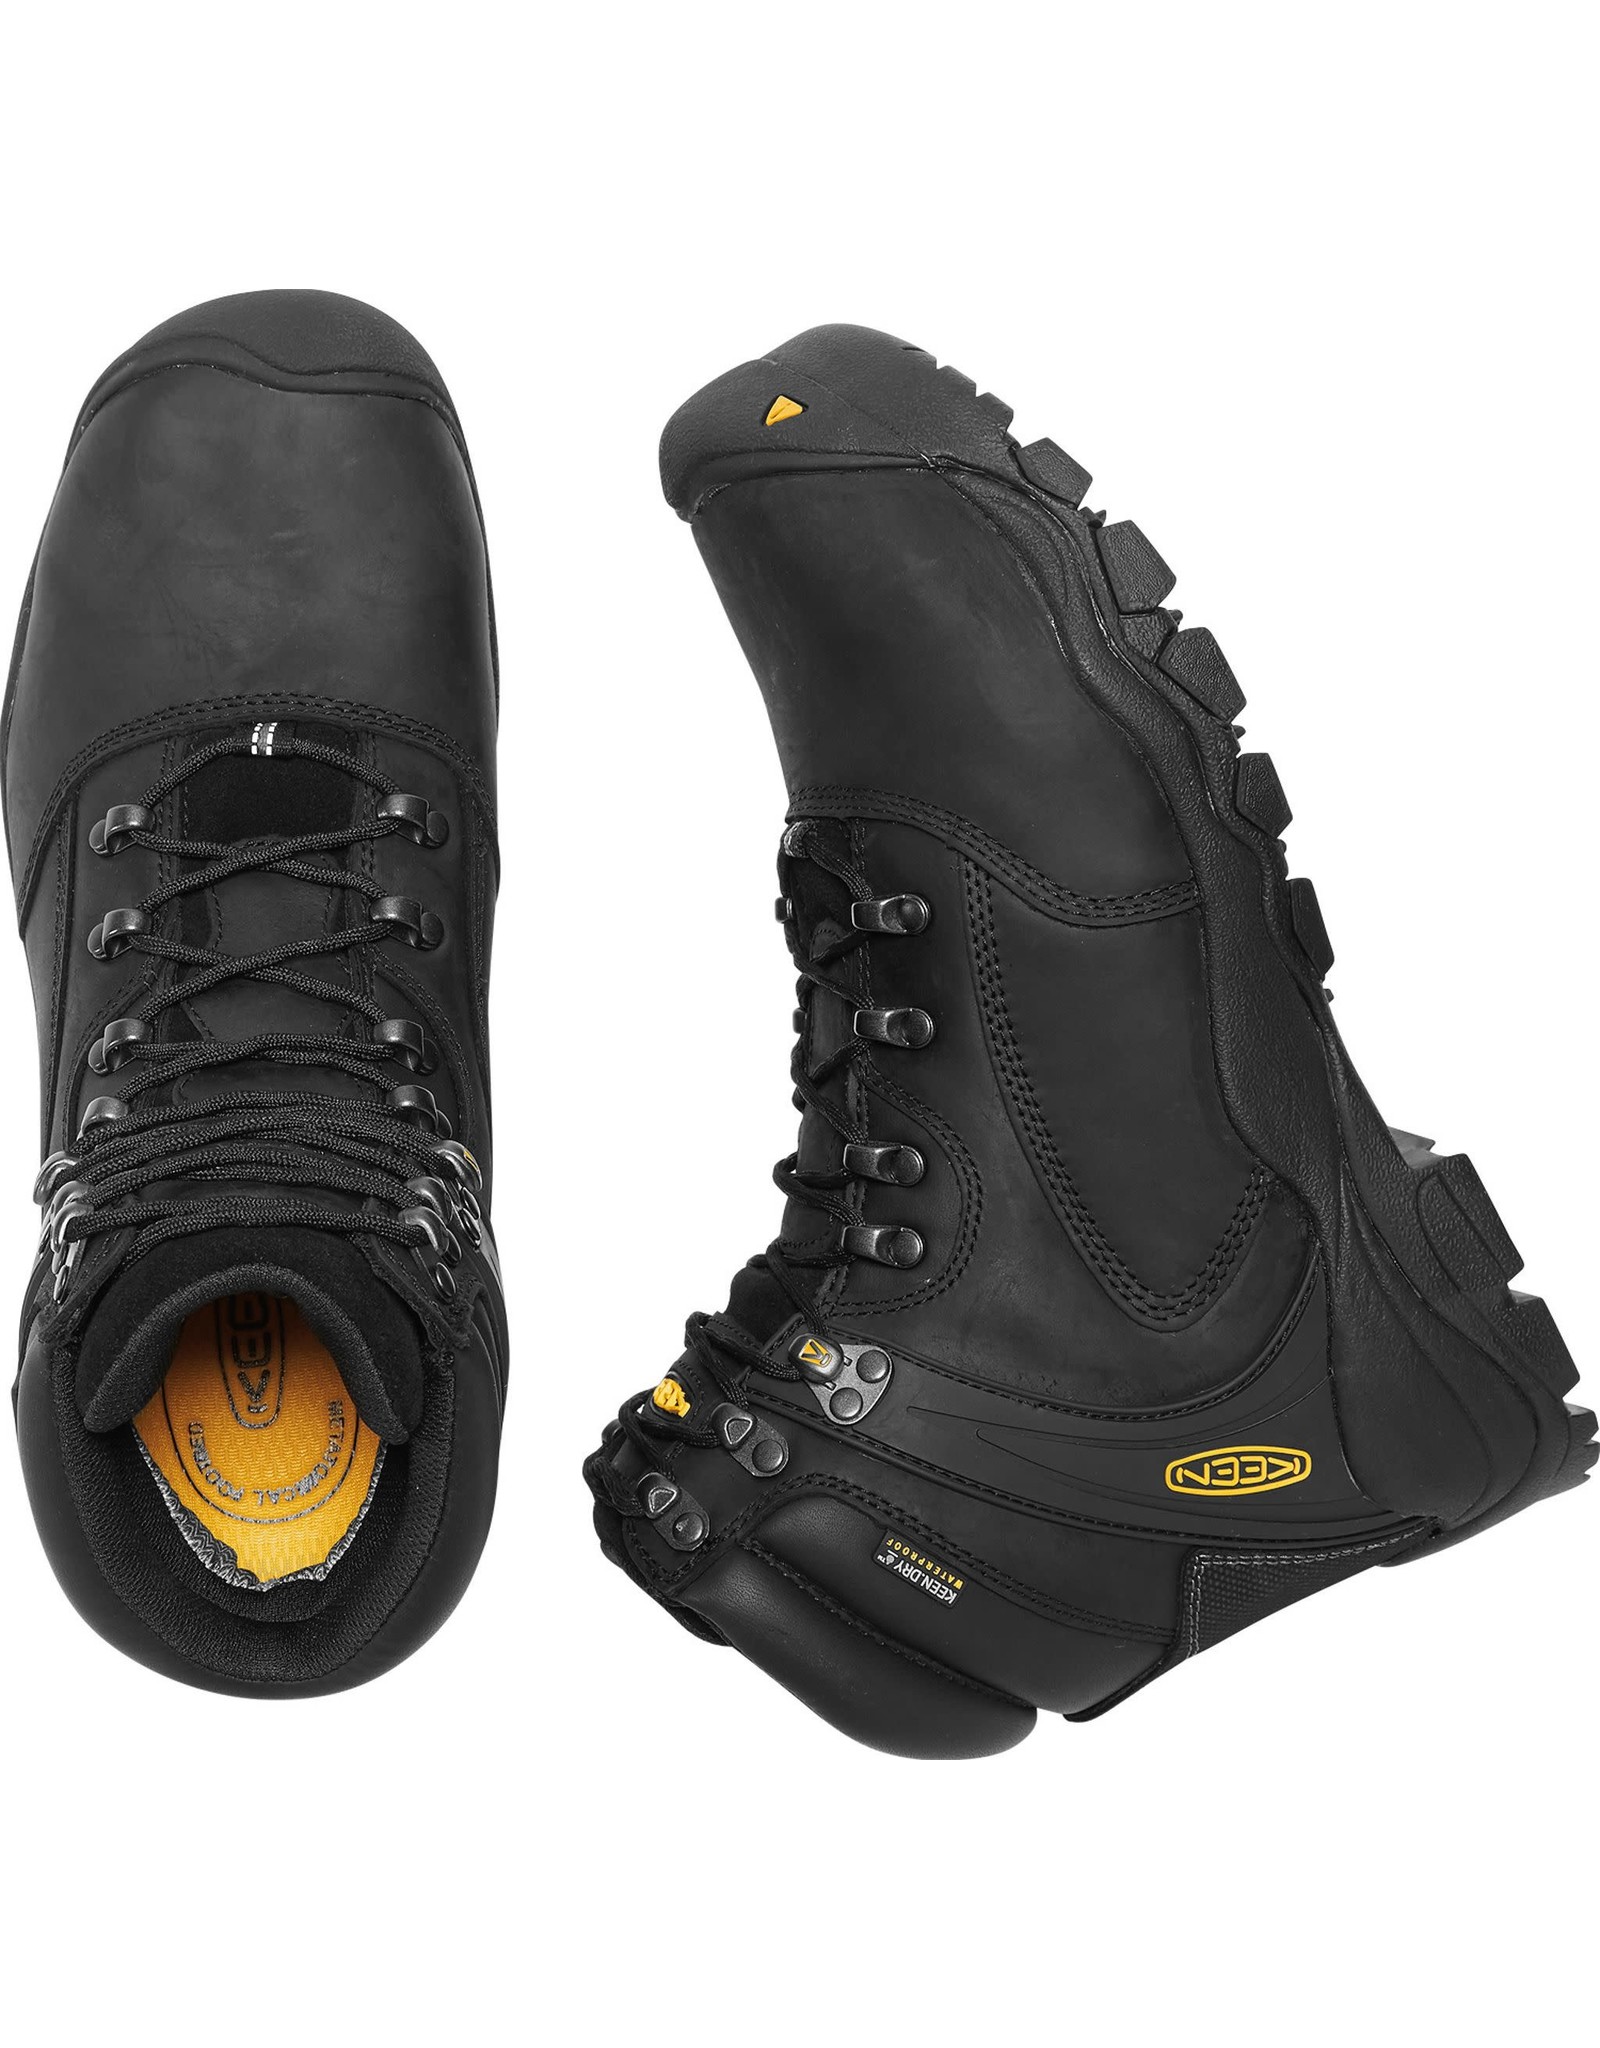 Keen Men's Louisville 1011357 6” Waterproof Steel Toe Work Boots